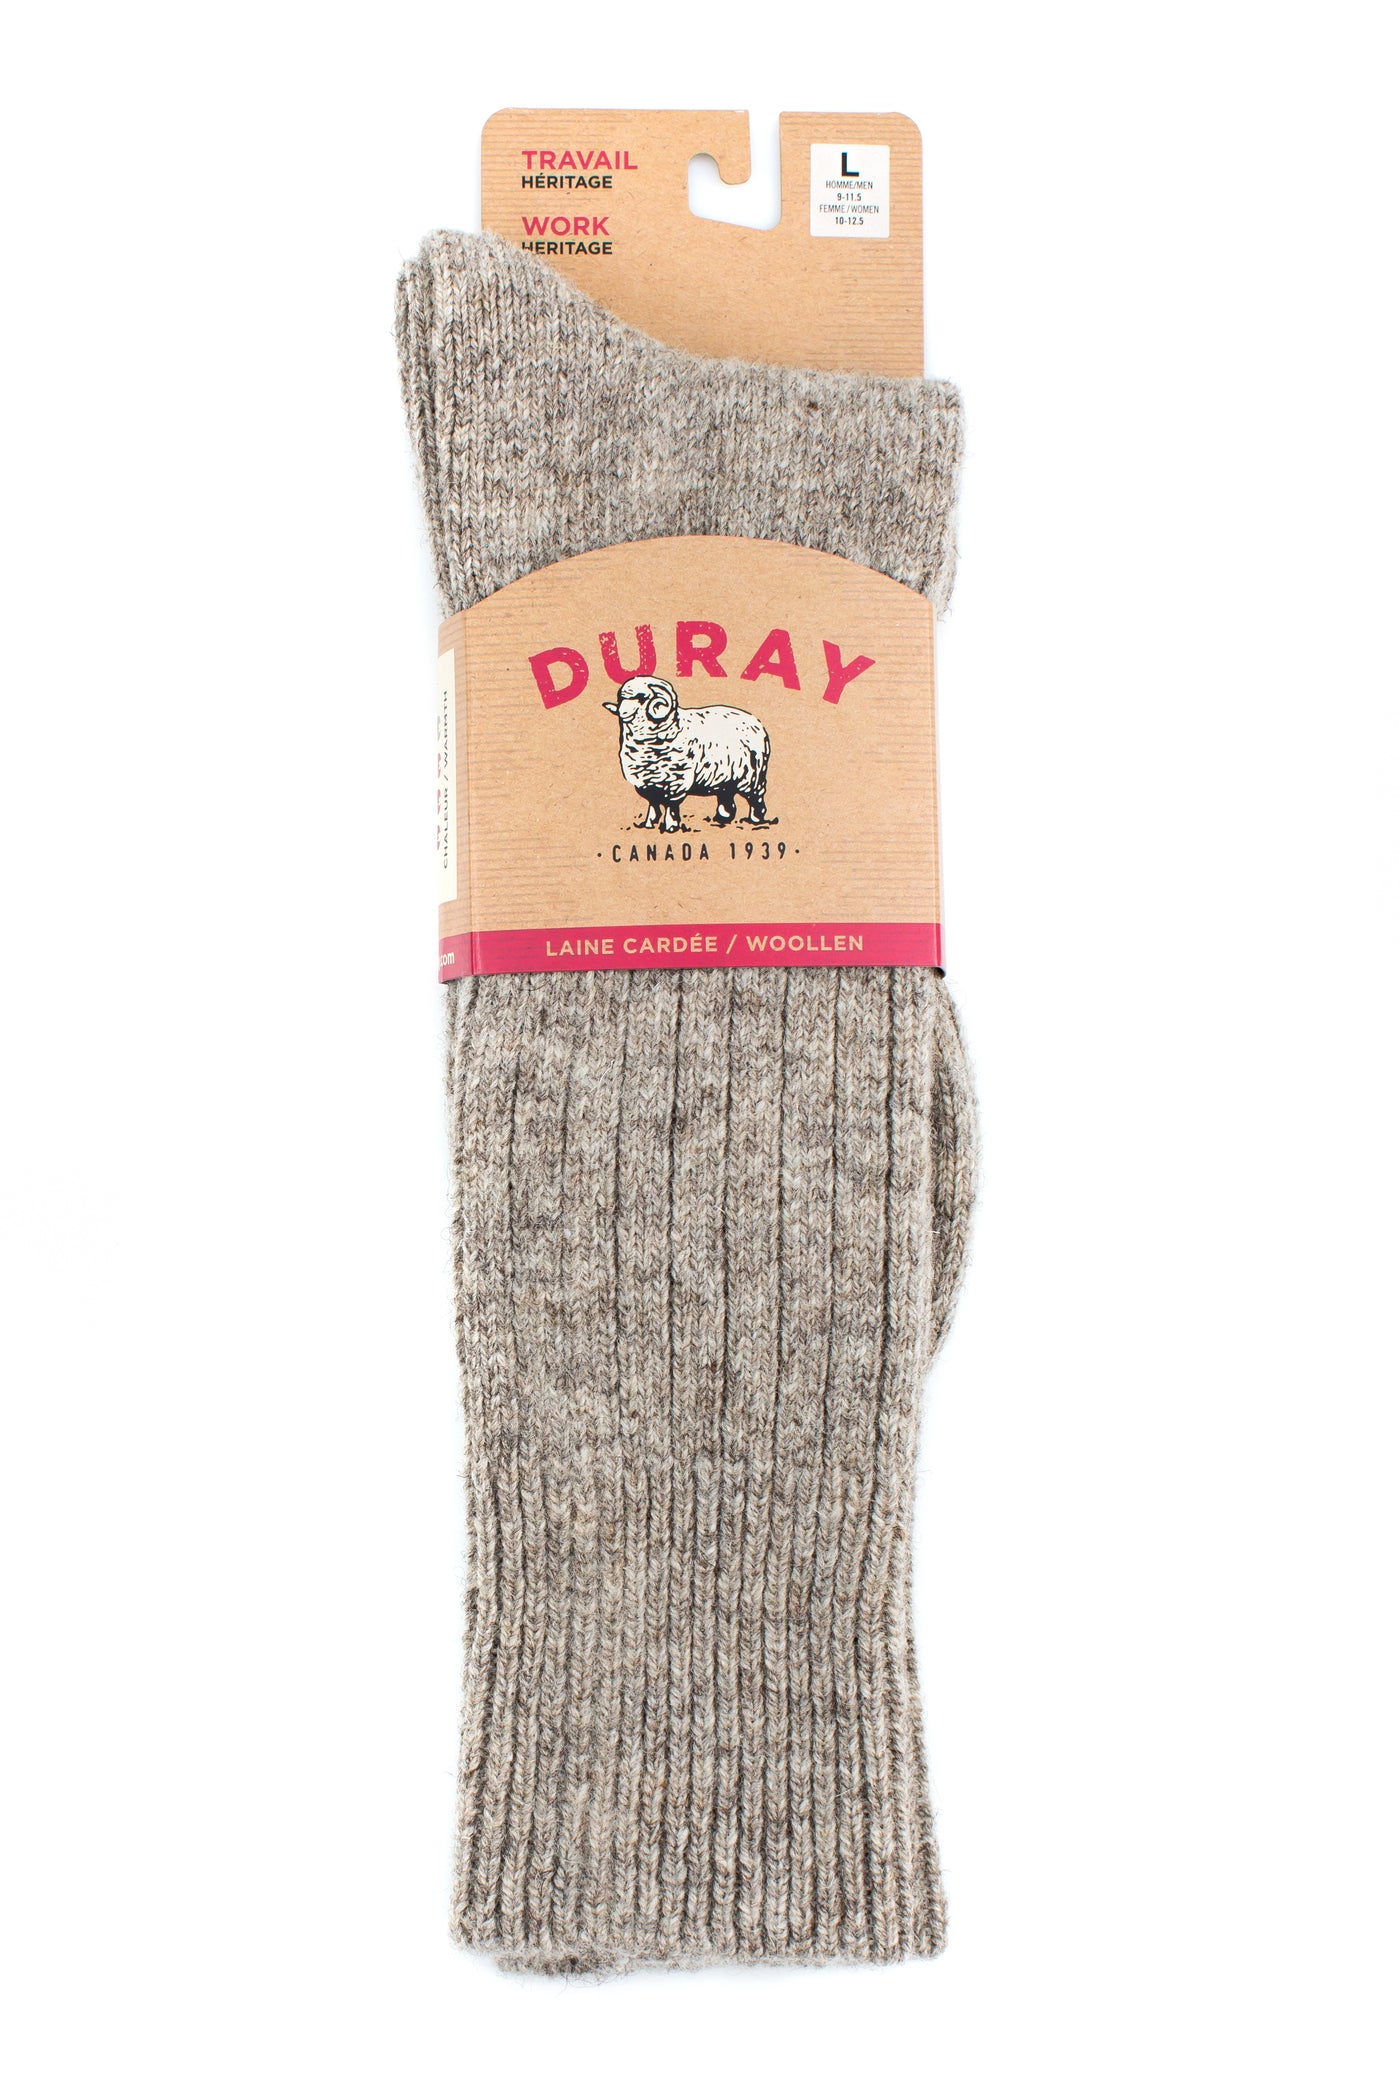 Sock, 100% Pure Virgin Wool